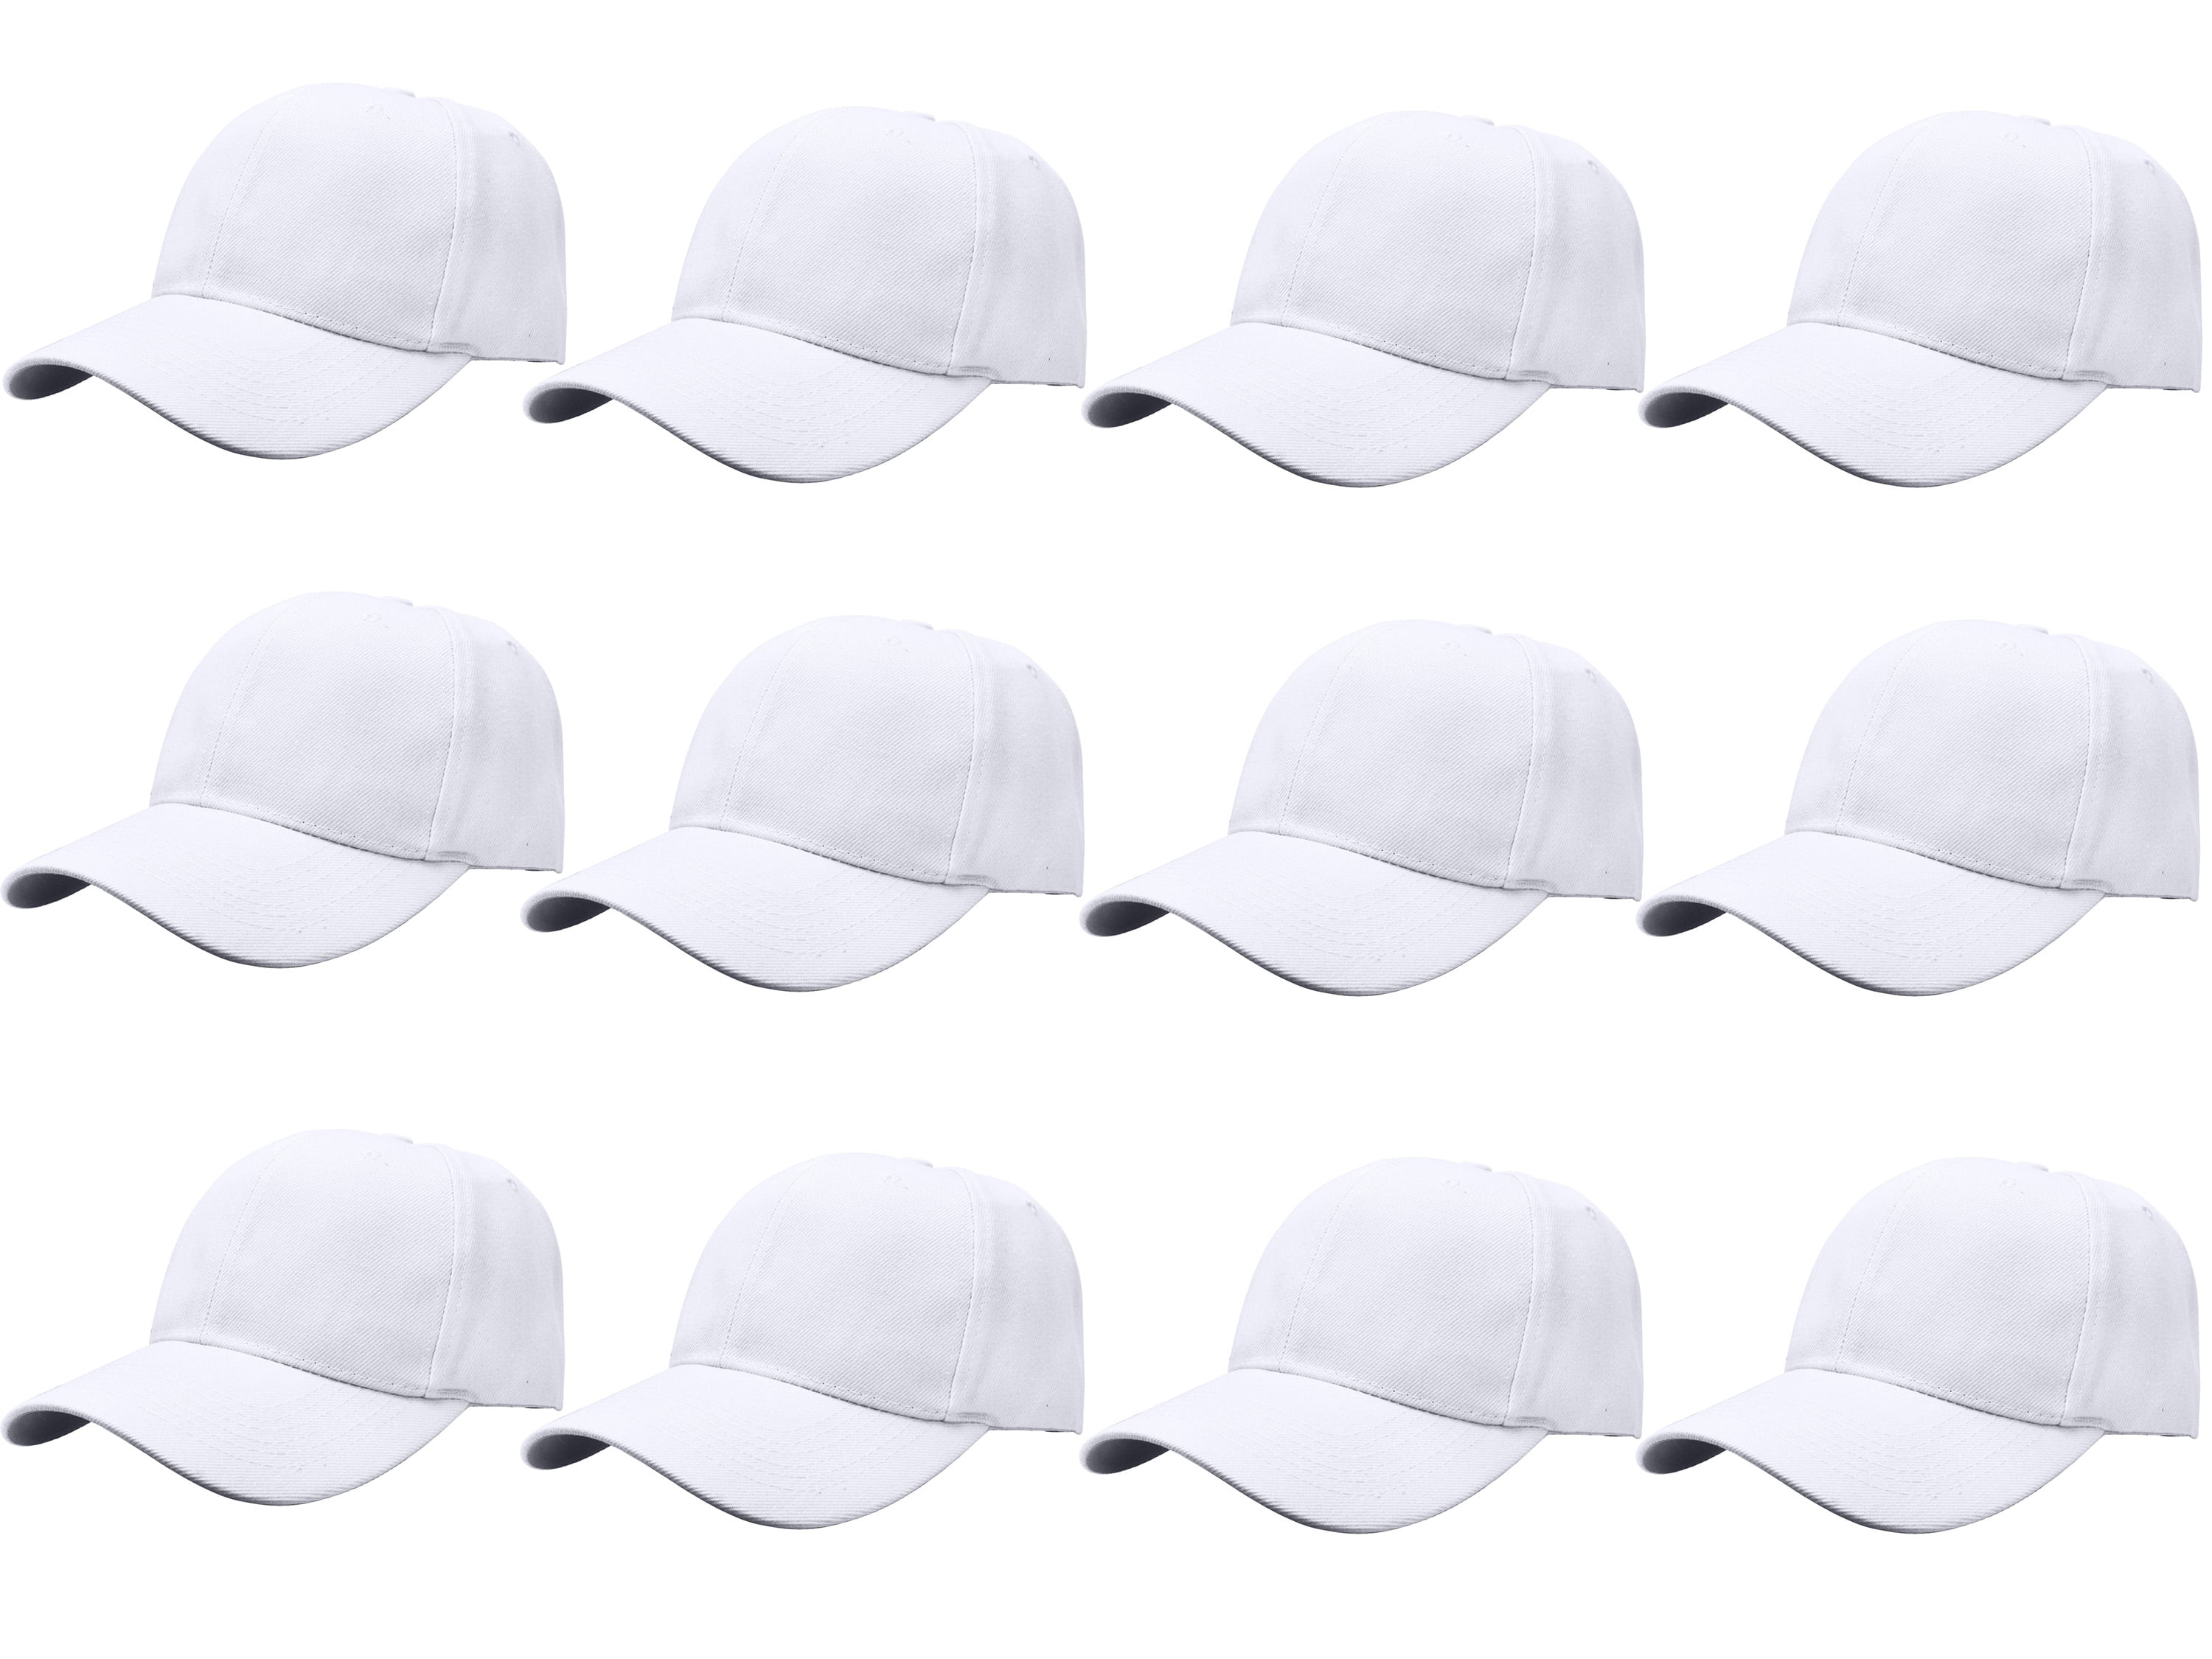 Gelante Baseball Caps 100% Cotton Plain Blank Adjustable Size WHOLESALE LOT 12 